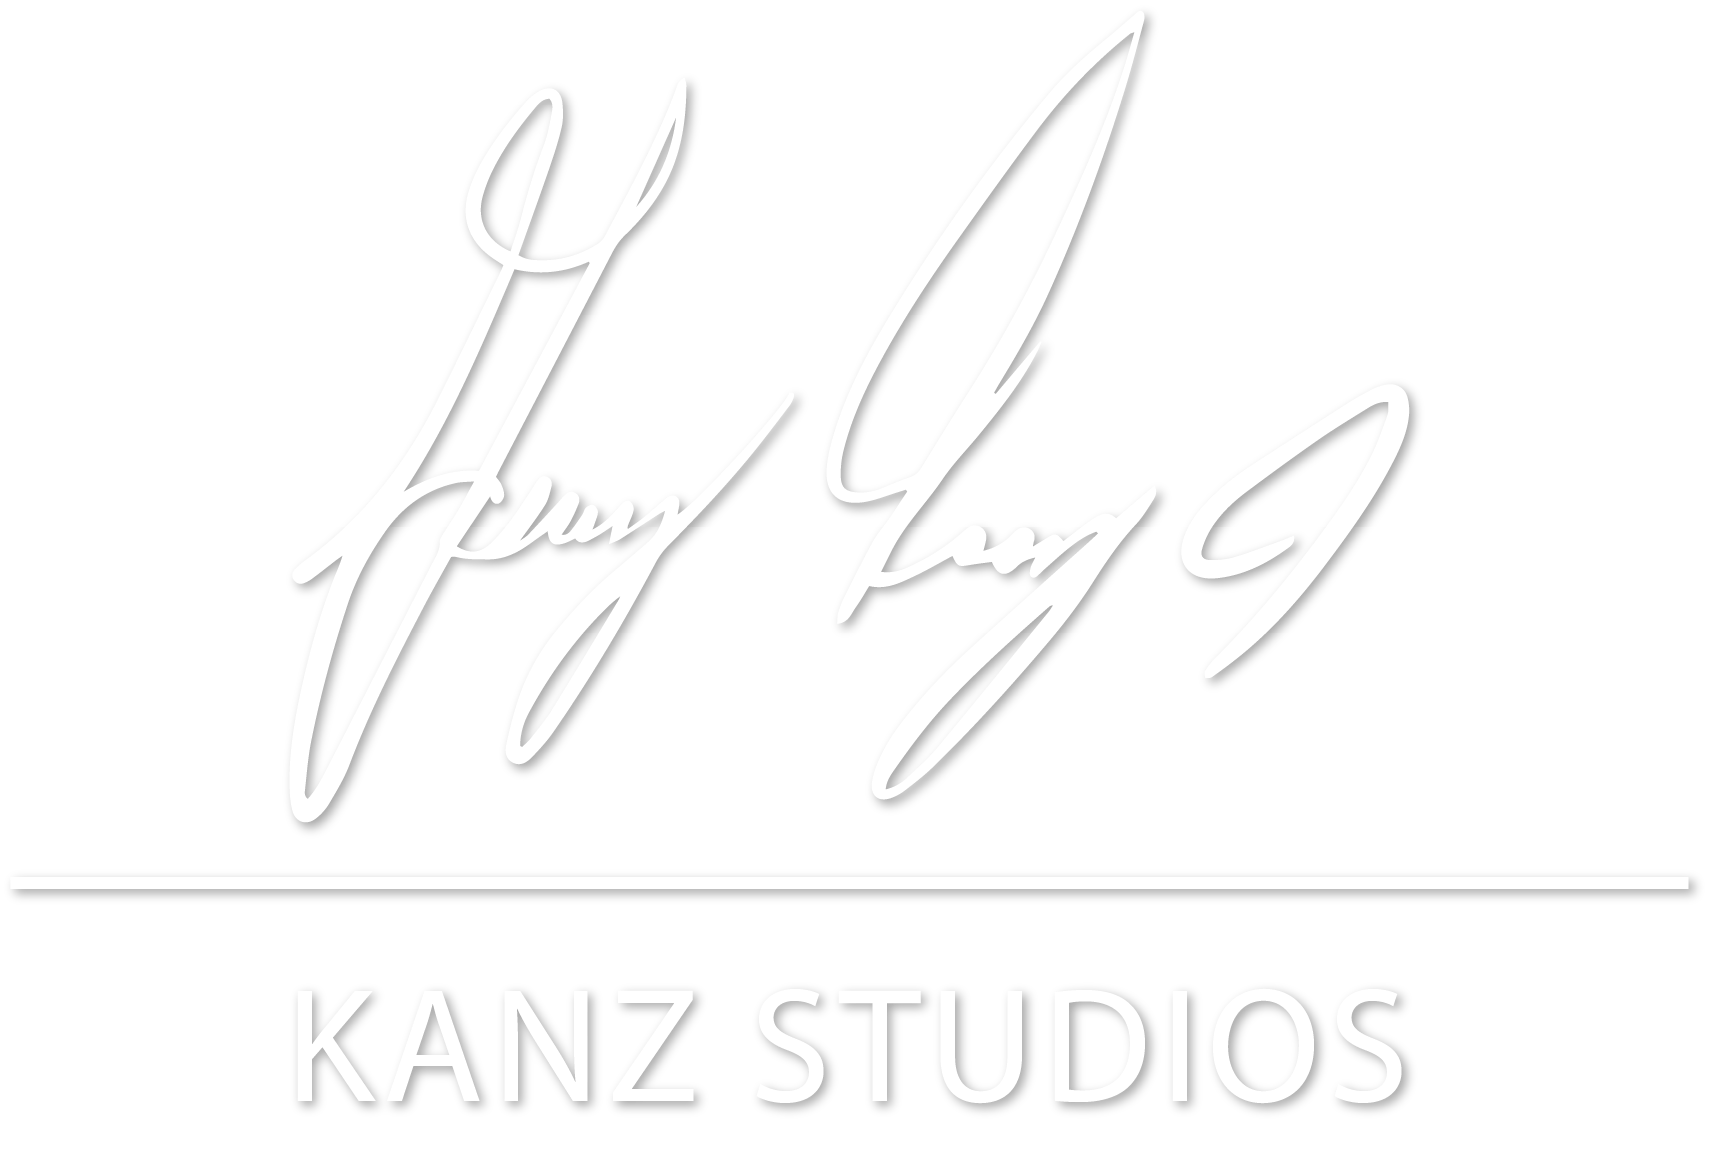 Kanz Studios